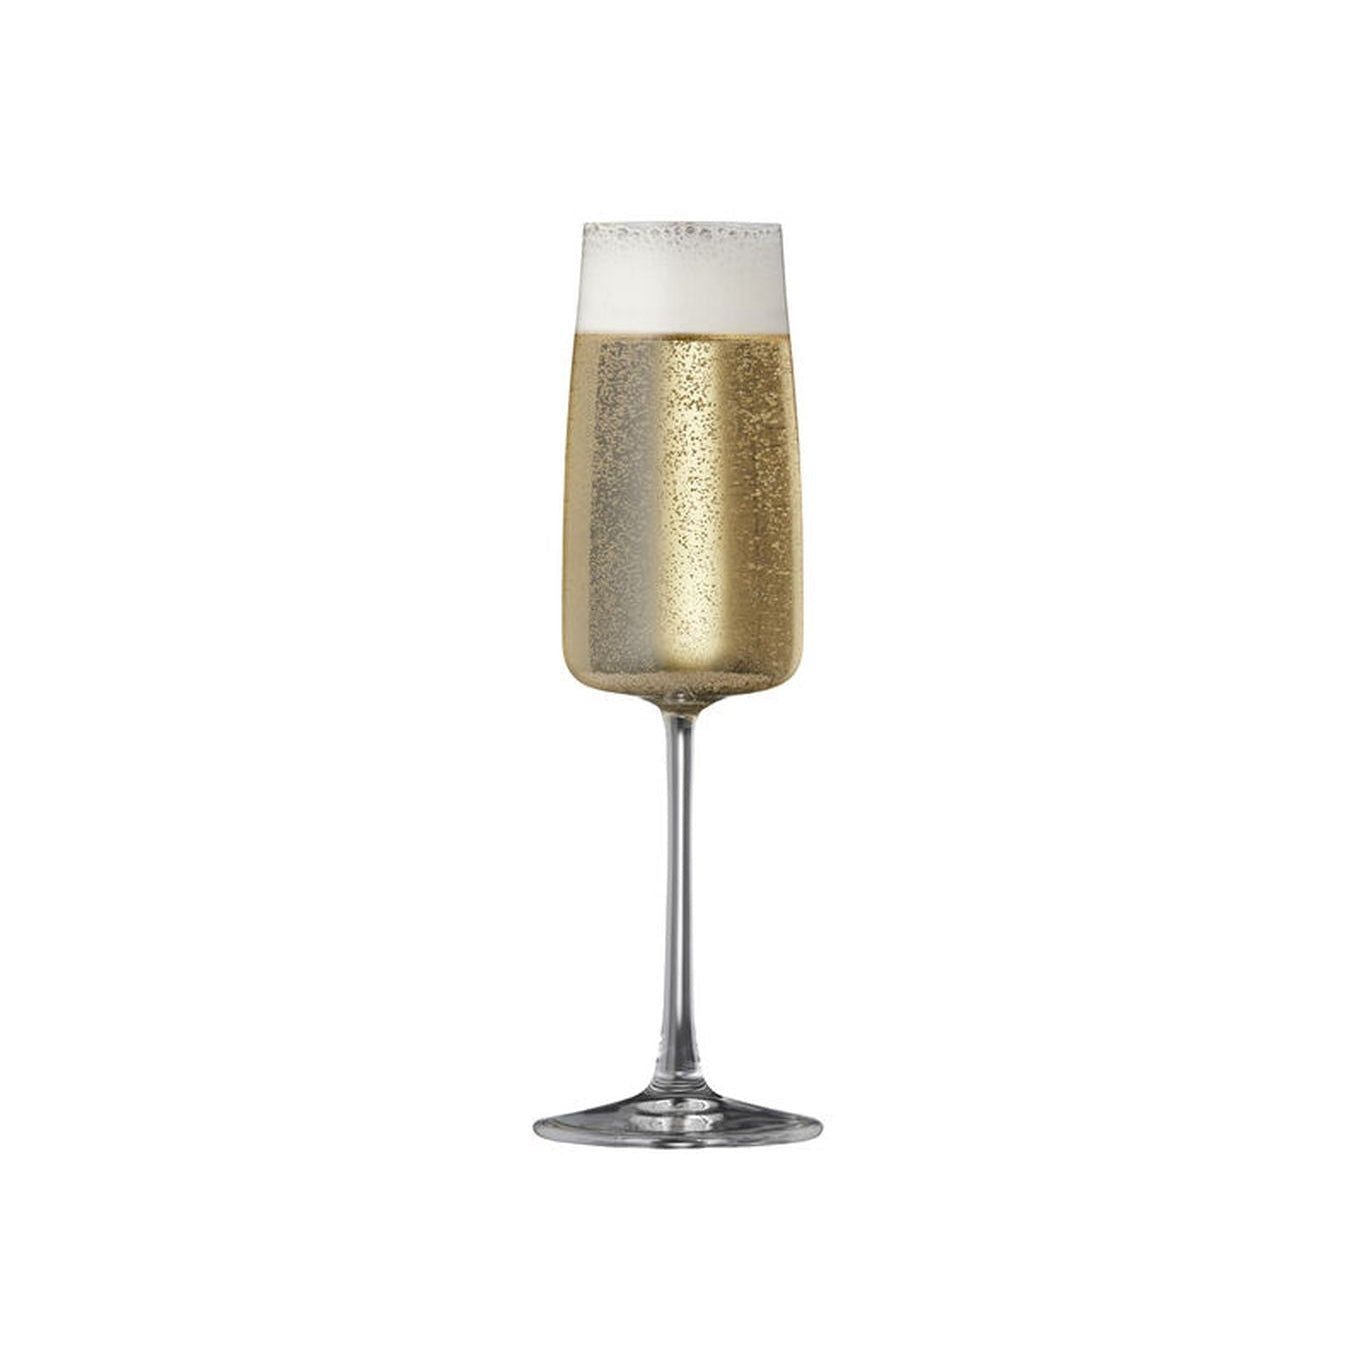 Lyngby Glas Zero Krystal Champagne Glass 30 Cl, 4 PC.